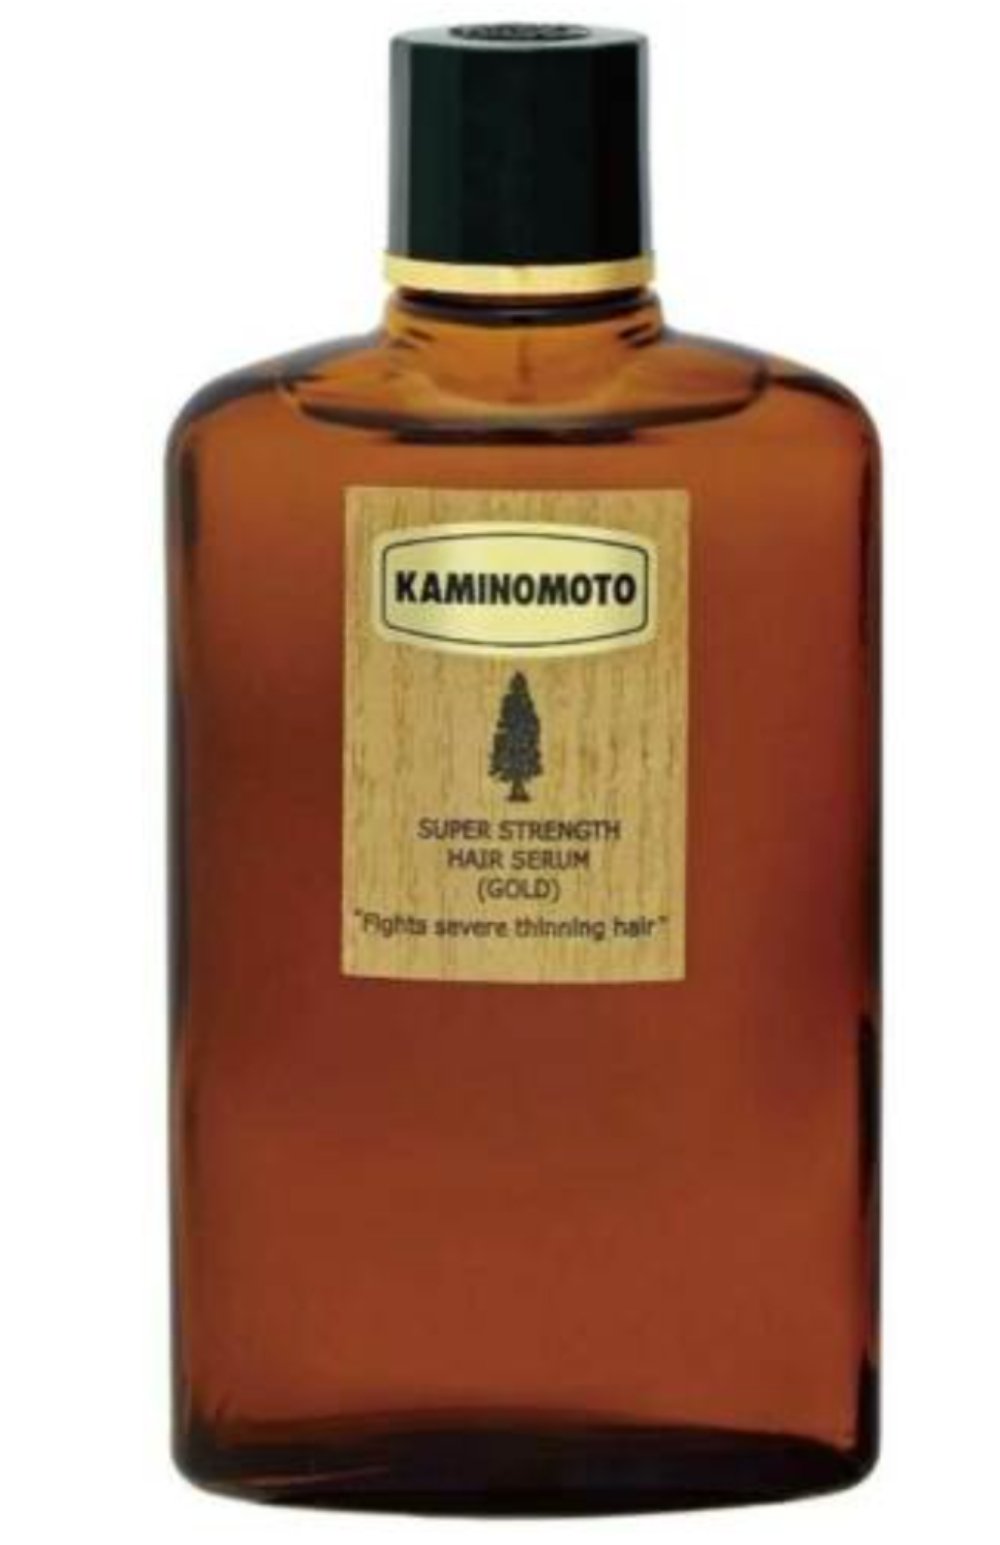 KAMINOMOTO - Super Strength Hair Serum Gold 150ml - The Face Method